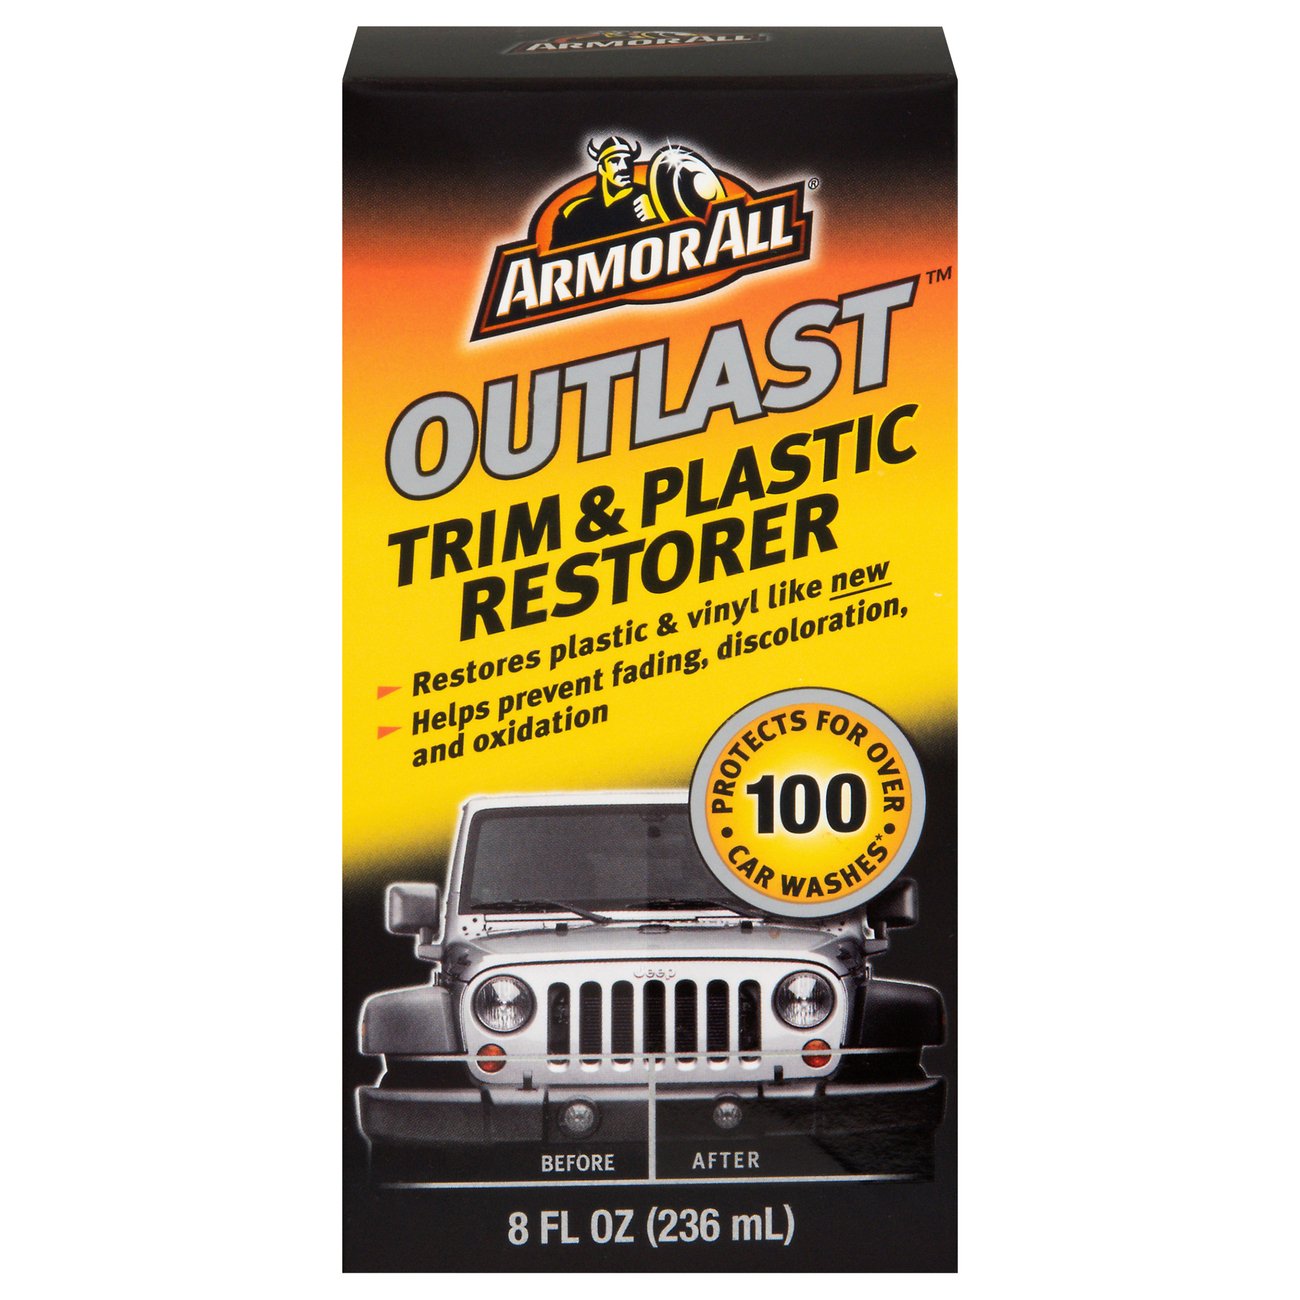 Armor All Outlast Trim & Plastic Restorer - Shop Automotive